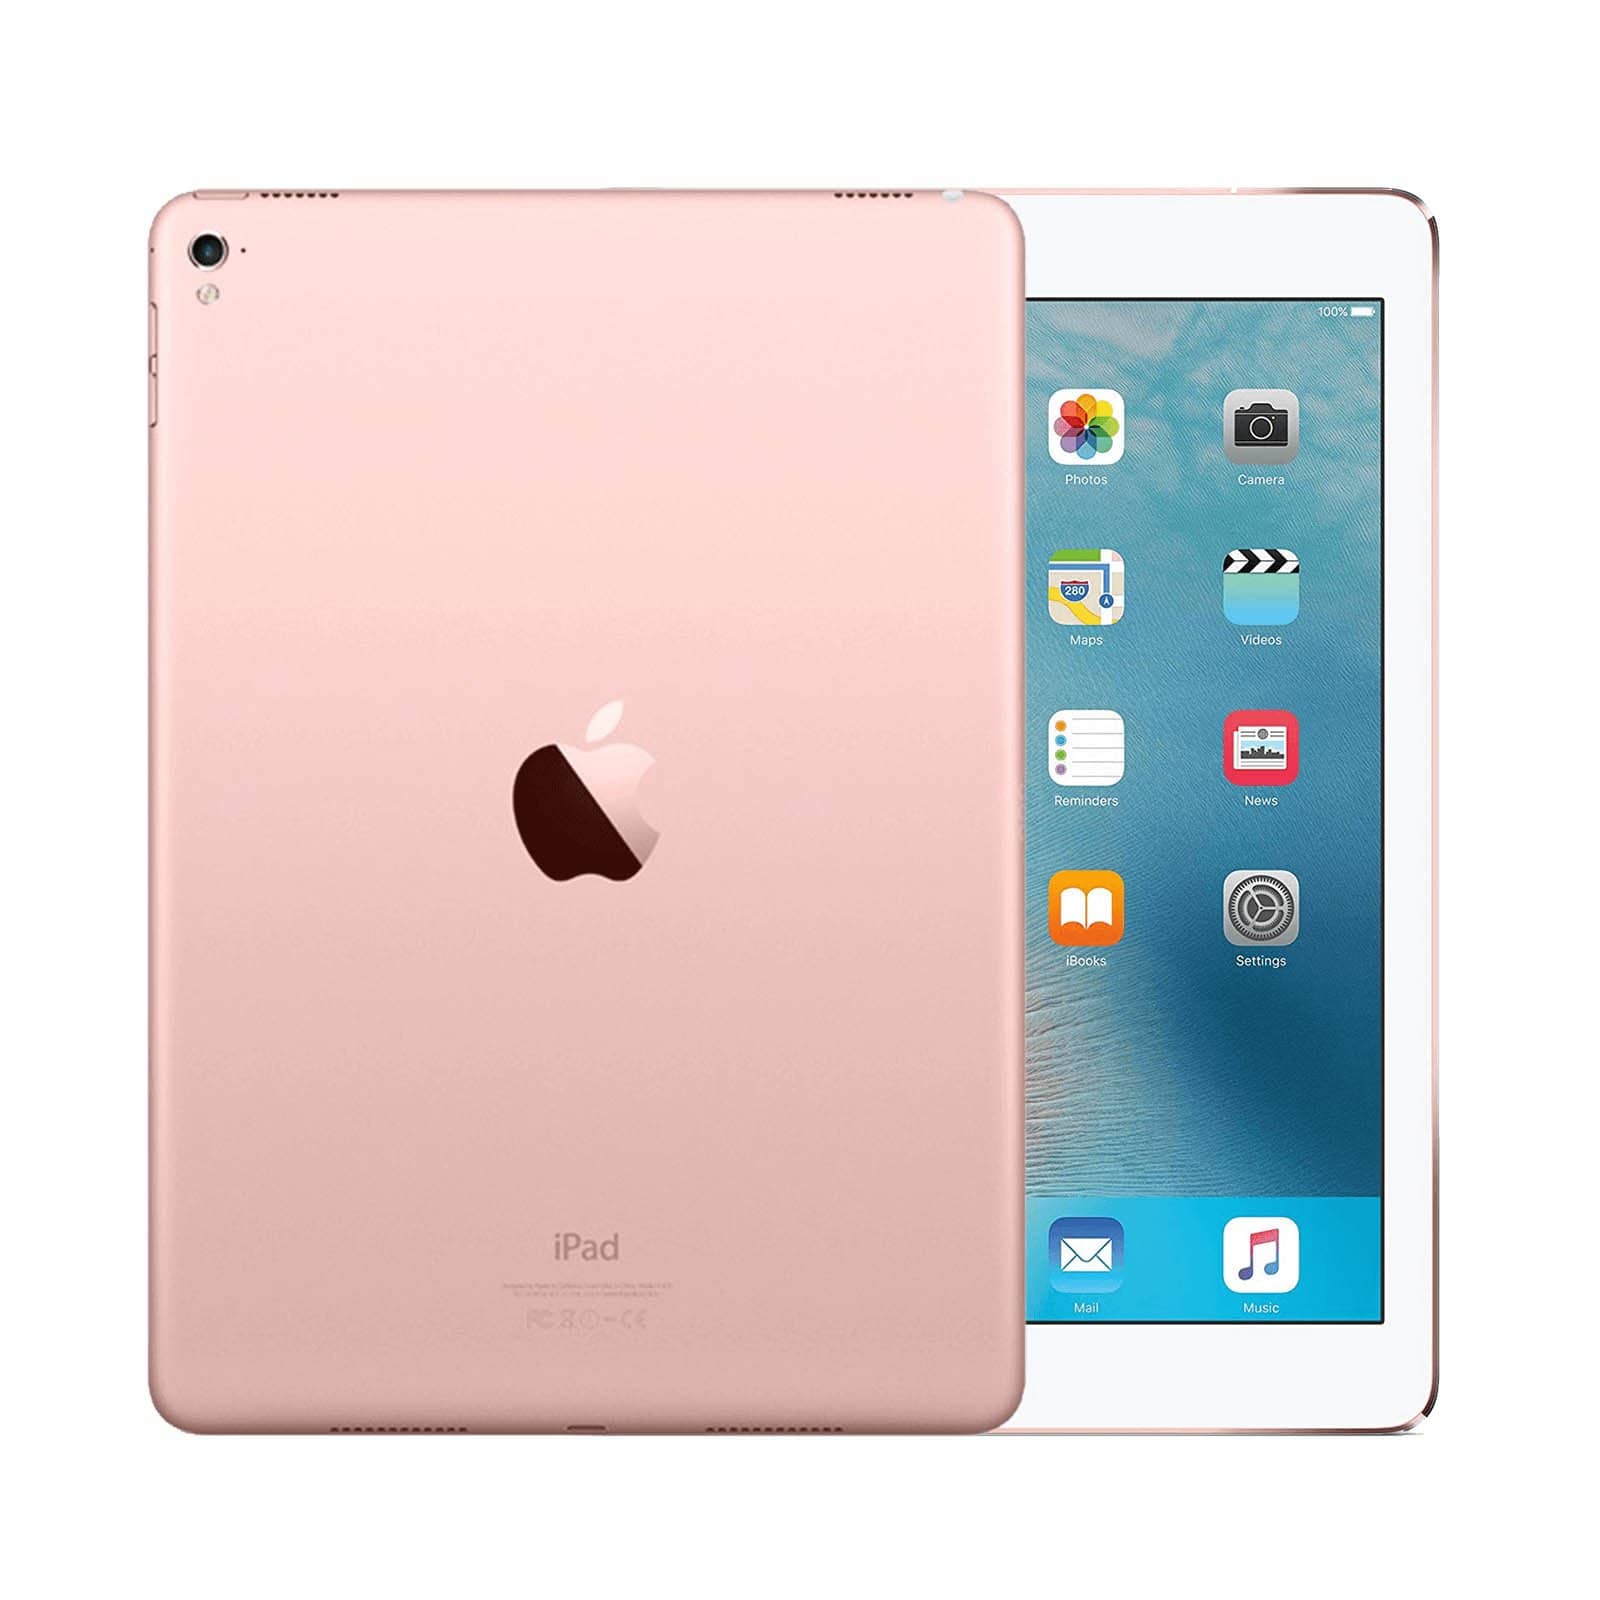 iPad Pro 9.7 Inch 128GB Rose Gold Good - WiFi 128GB Rose Gold Good